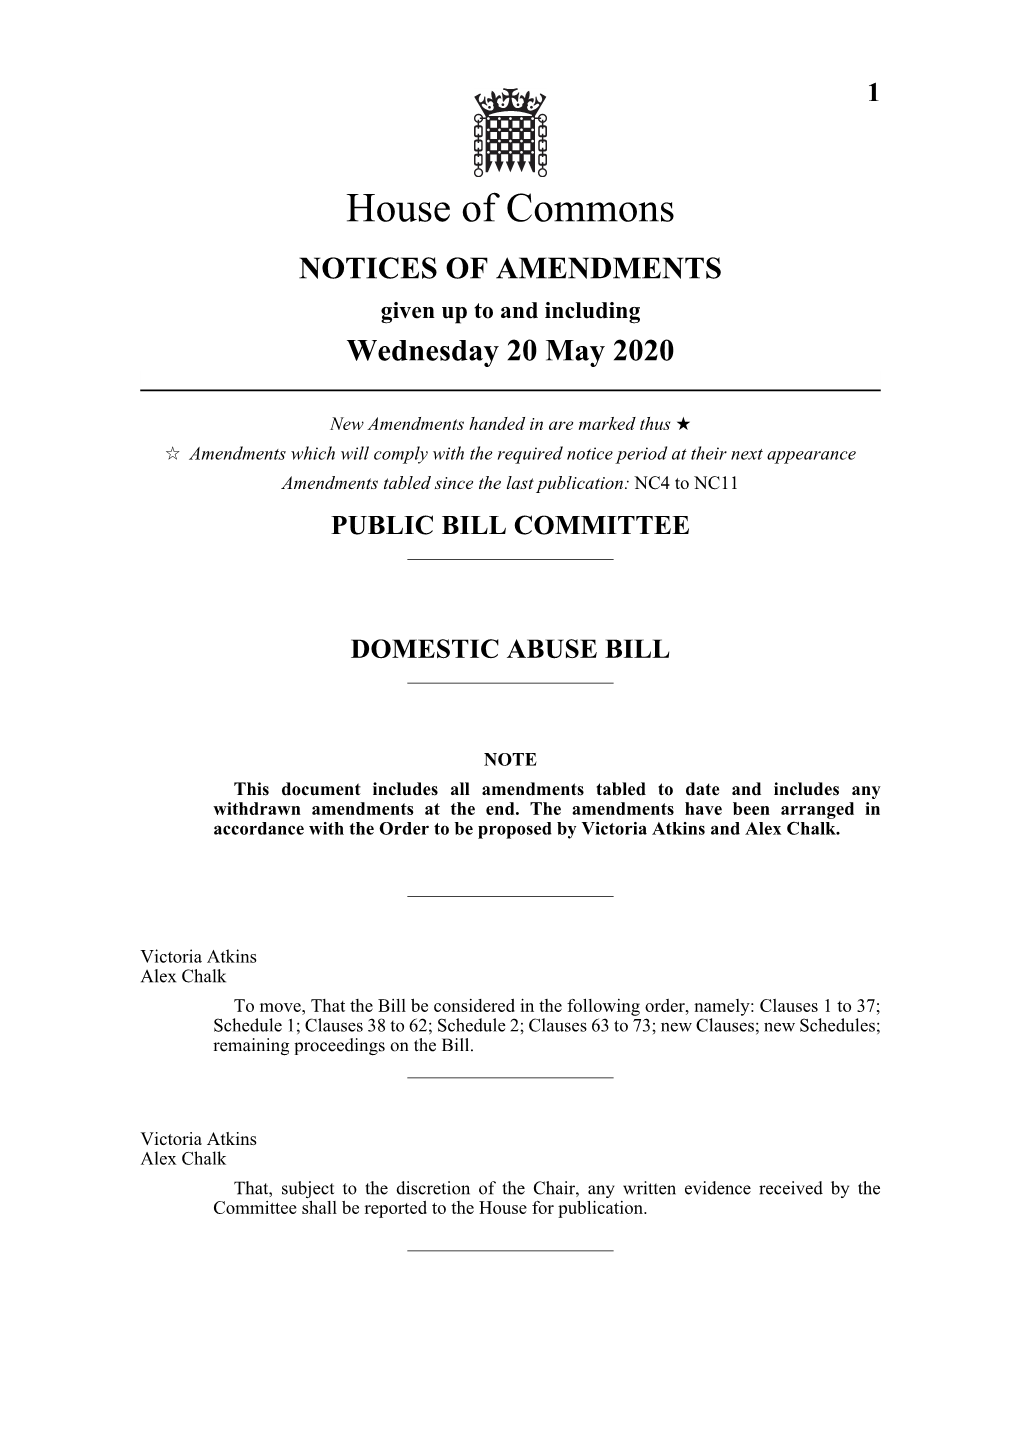 Notice of Amendments to 20